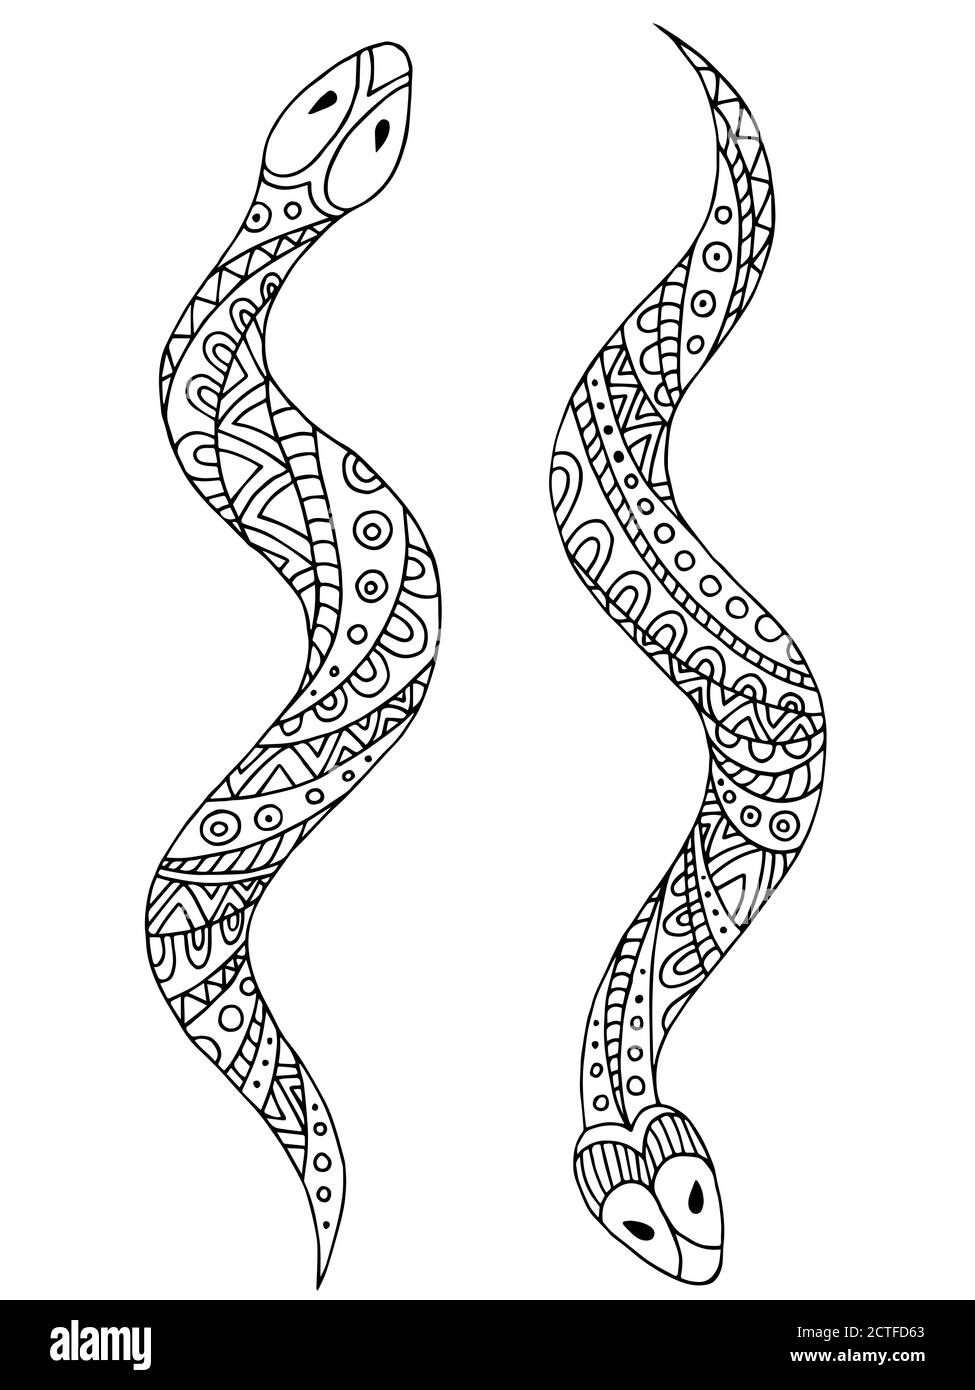 Snake animal graphic black white isolated illustration vector Stock Vector